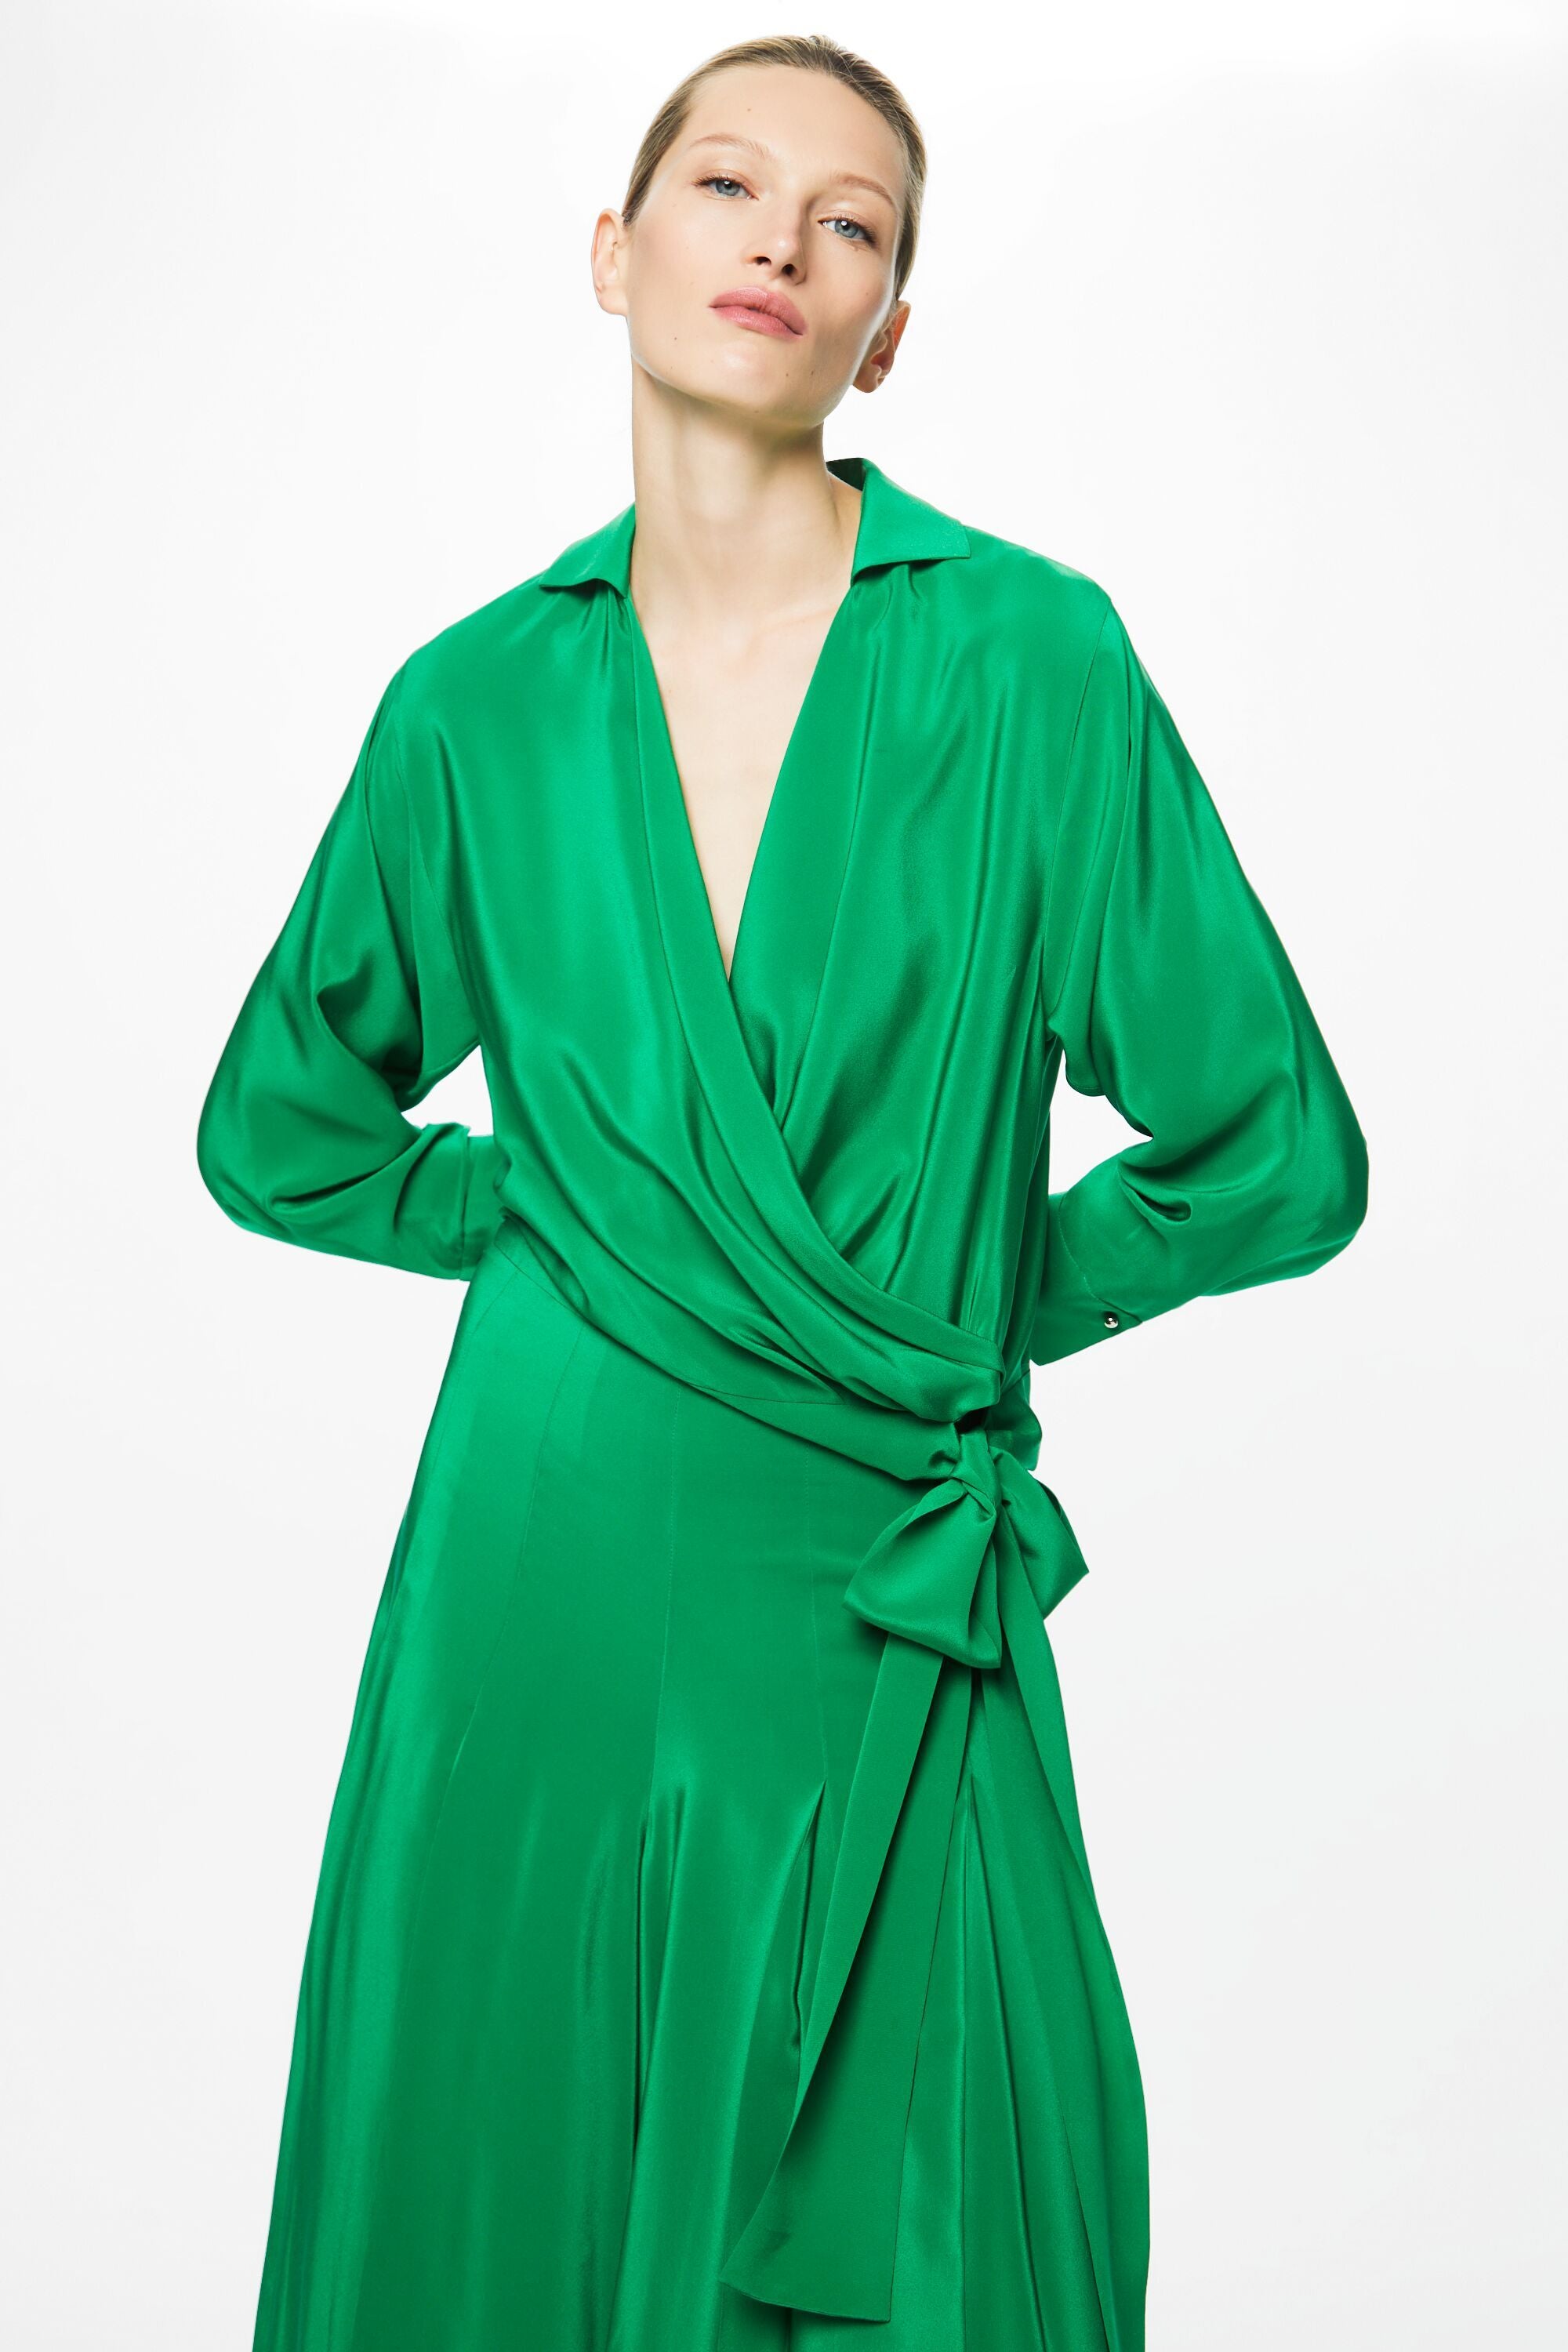 Cachecoeur crepe chine shirt with bow green - CH Carolina Herrera